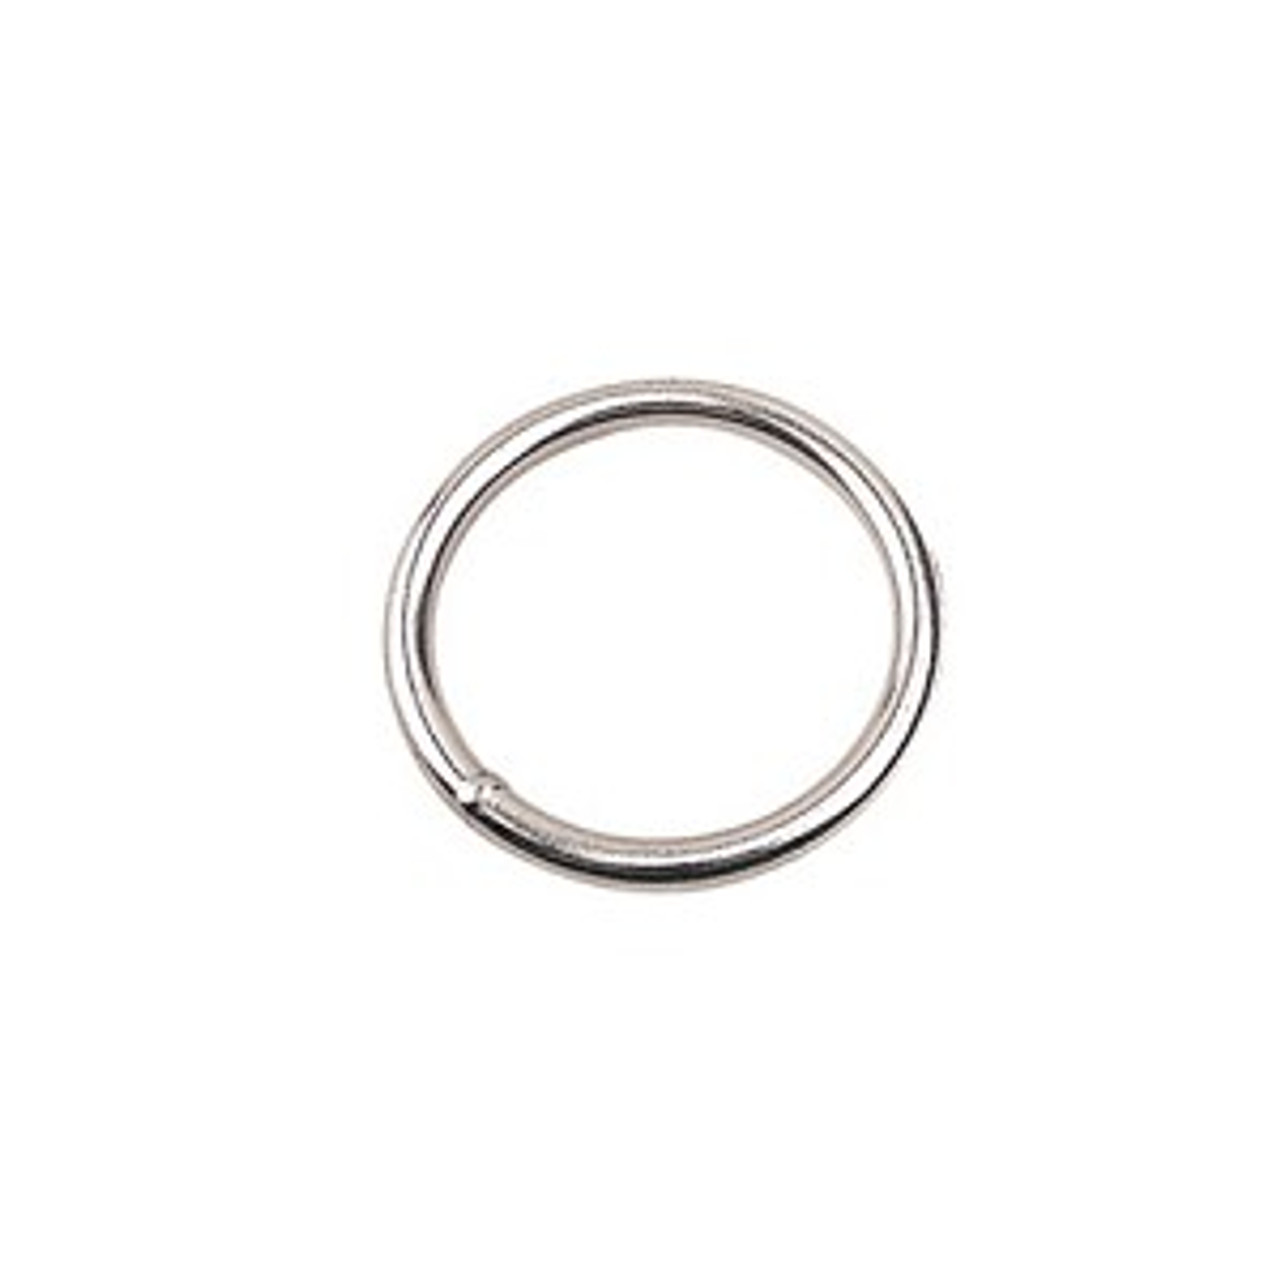 2" diameter stainless steel ring